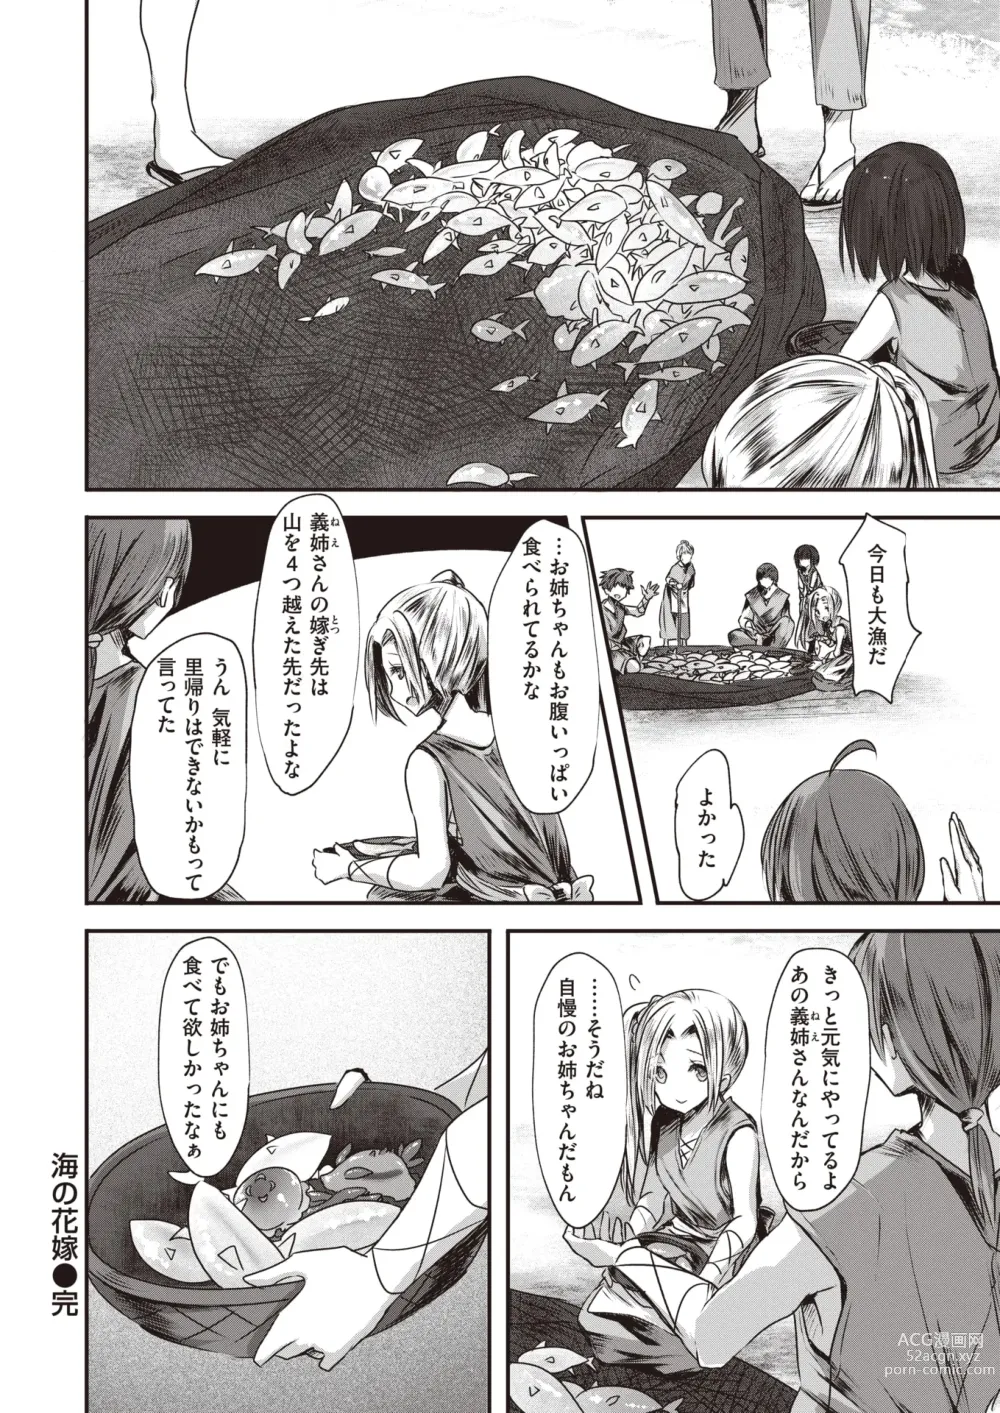 Page 71 of manga Isekai Rakuten Vol. 23